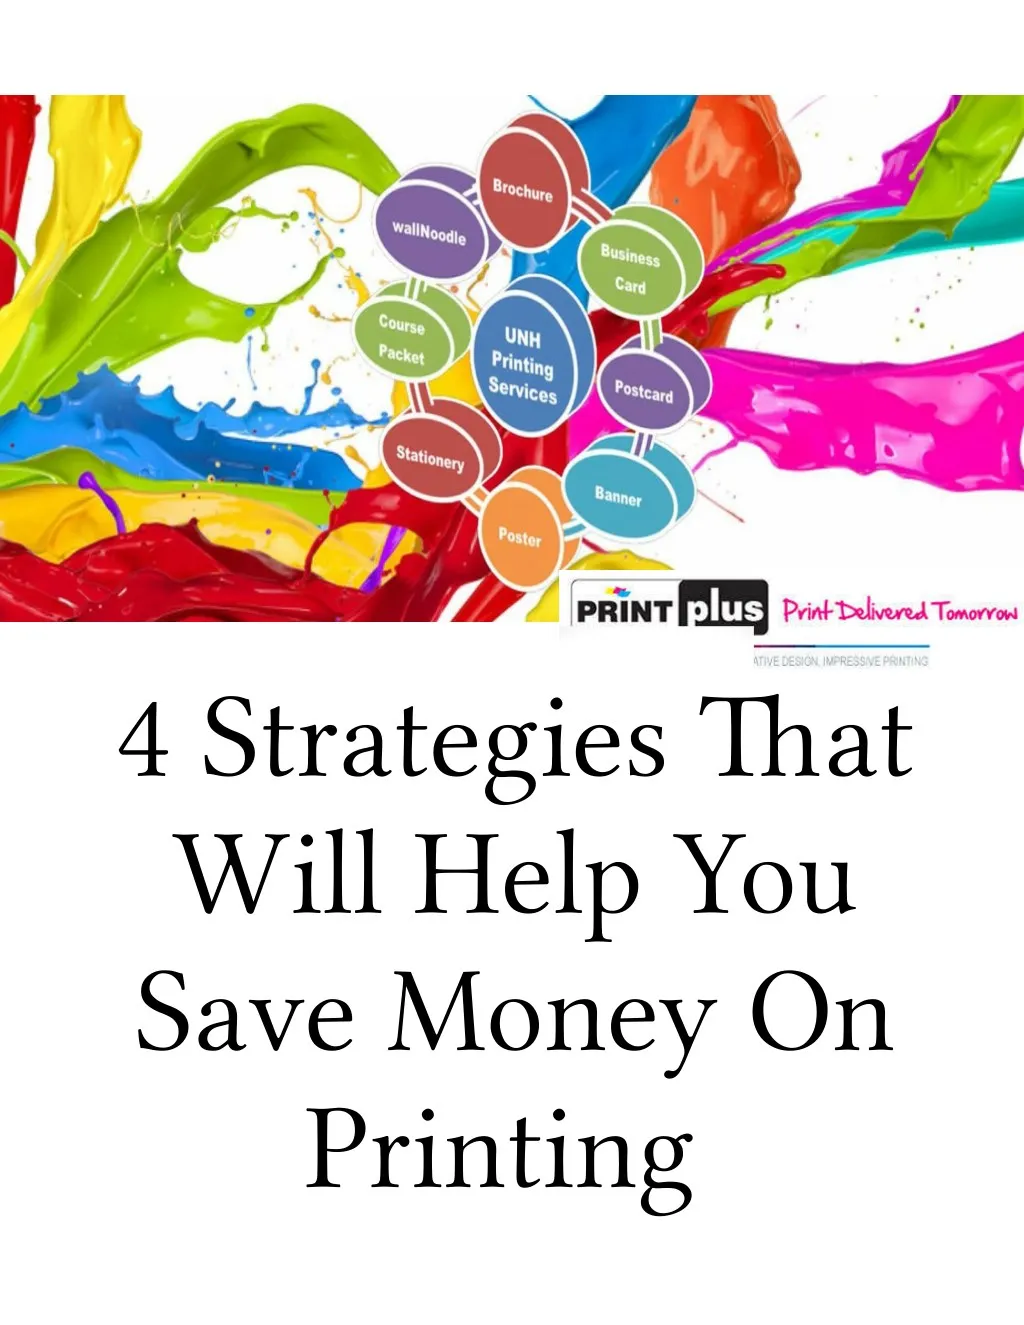 4 strategies tat will help you save money